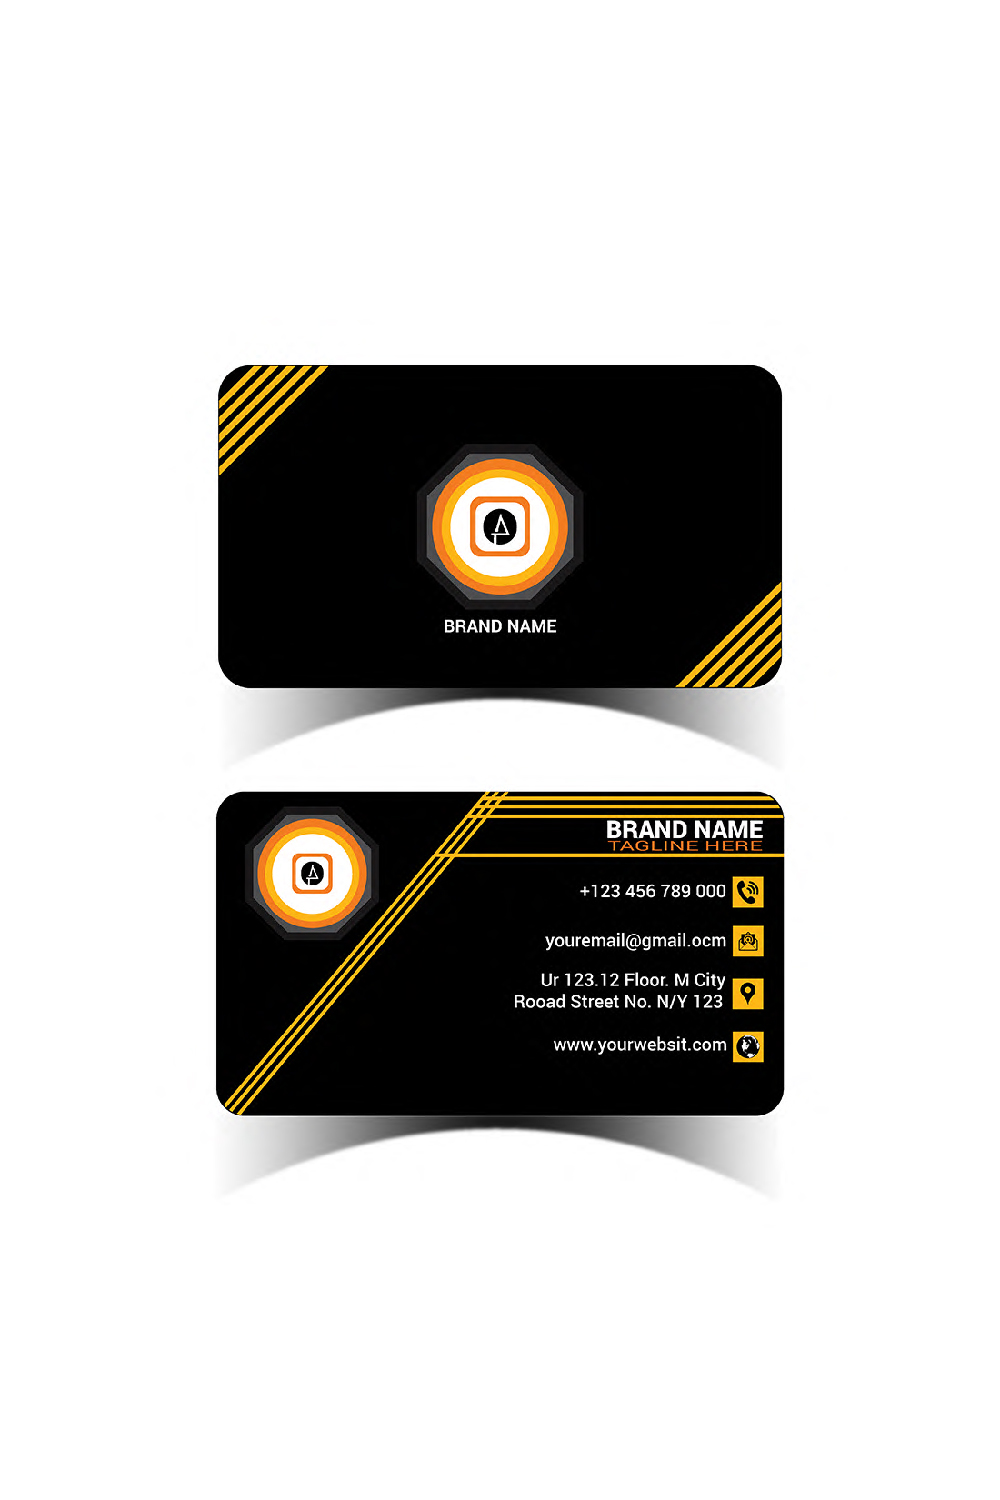 Creative Dark and Yellow Business Card Design Template - Pinterest.